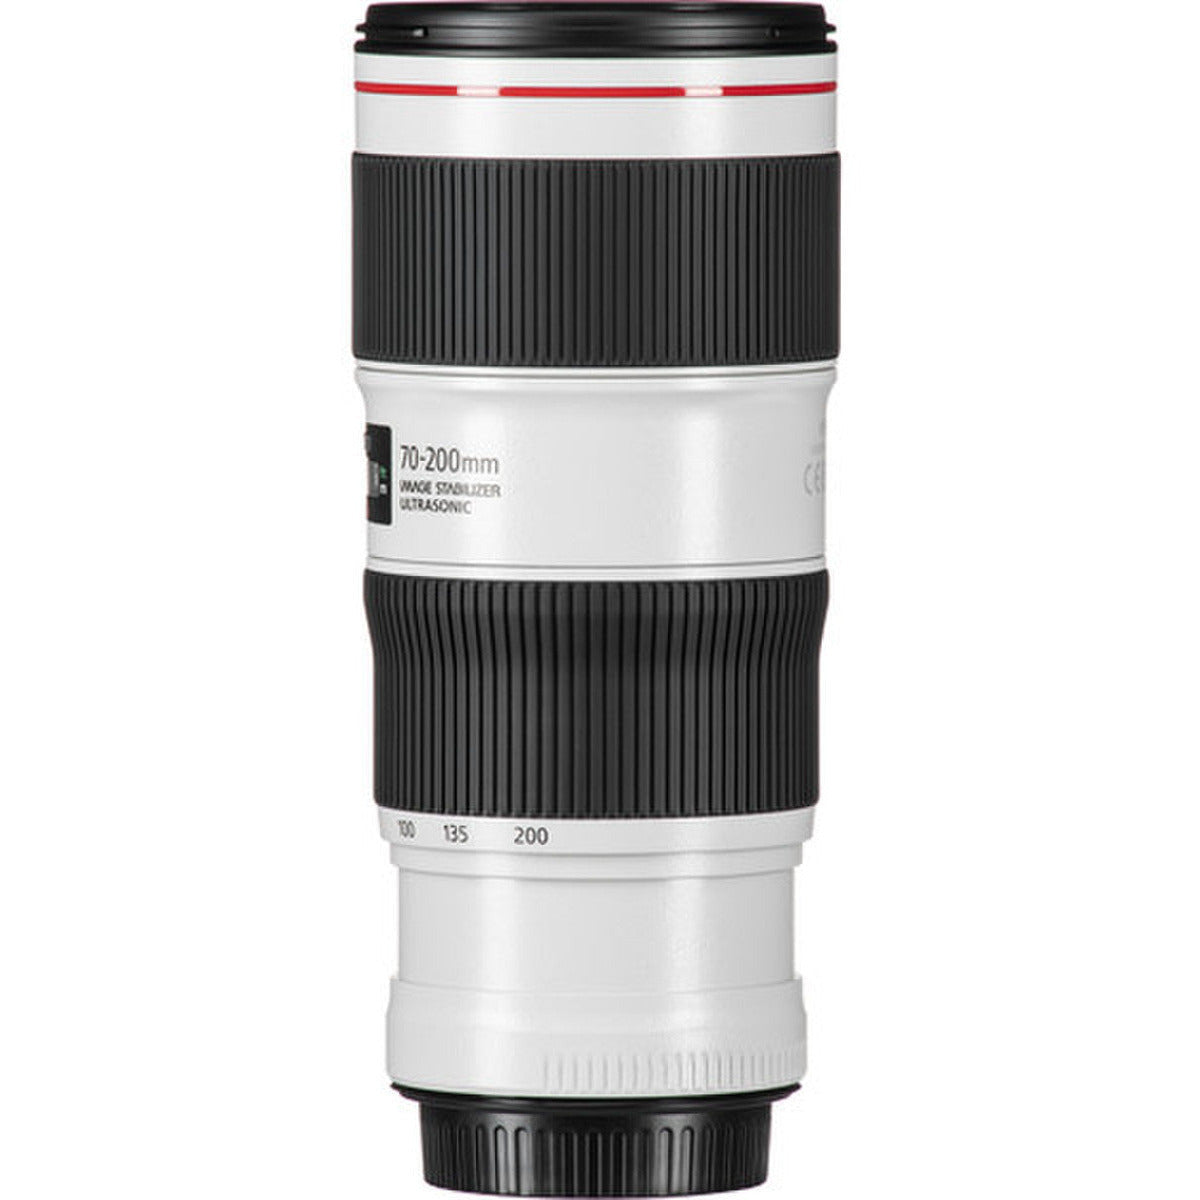 Canon EF 70-200mm f/4L IS II USM Telephoto Lens - Dragon Image